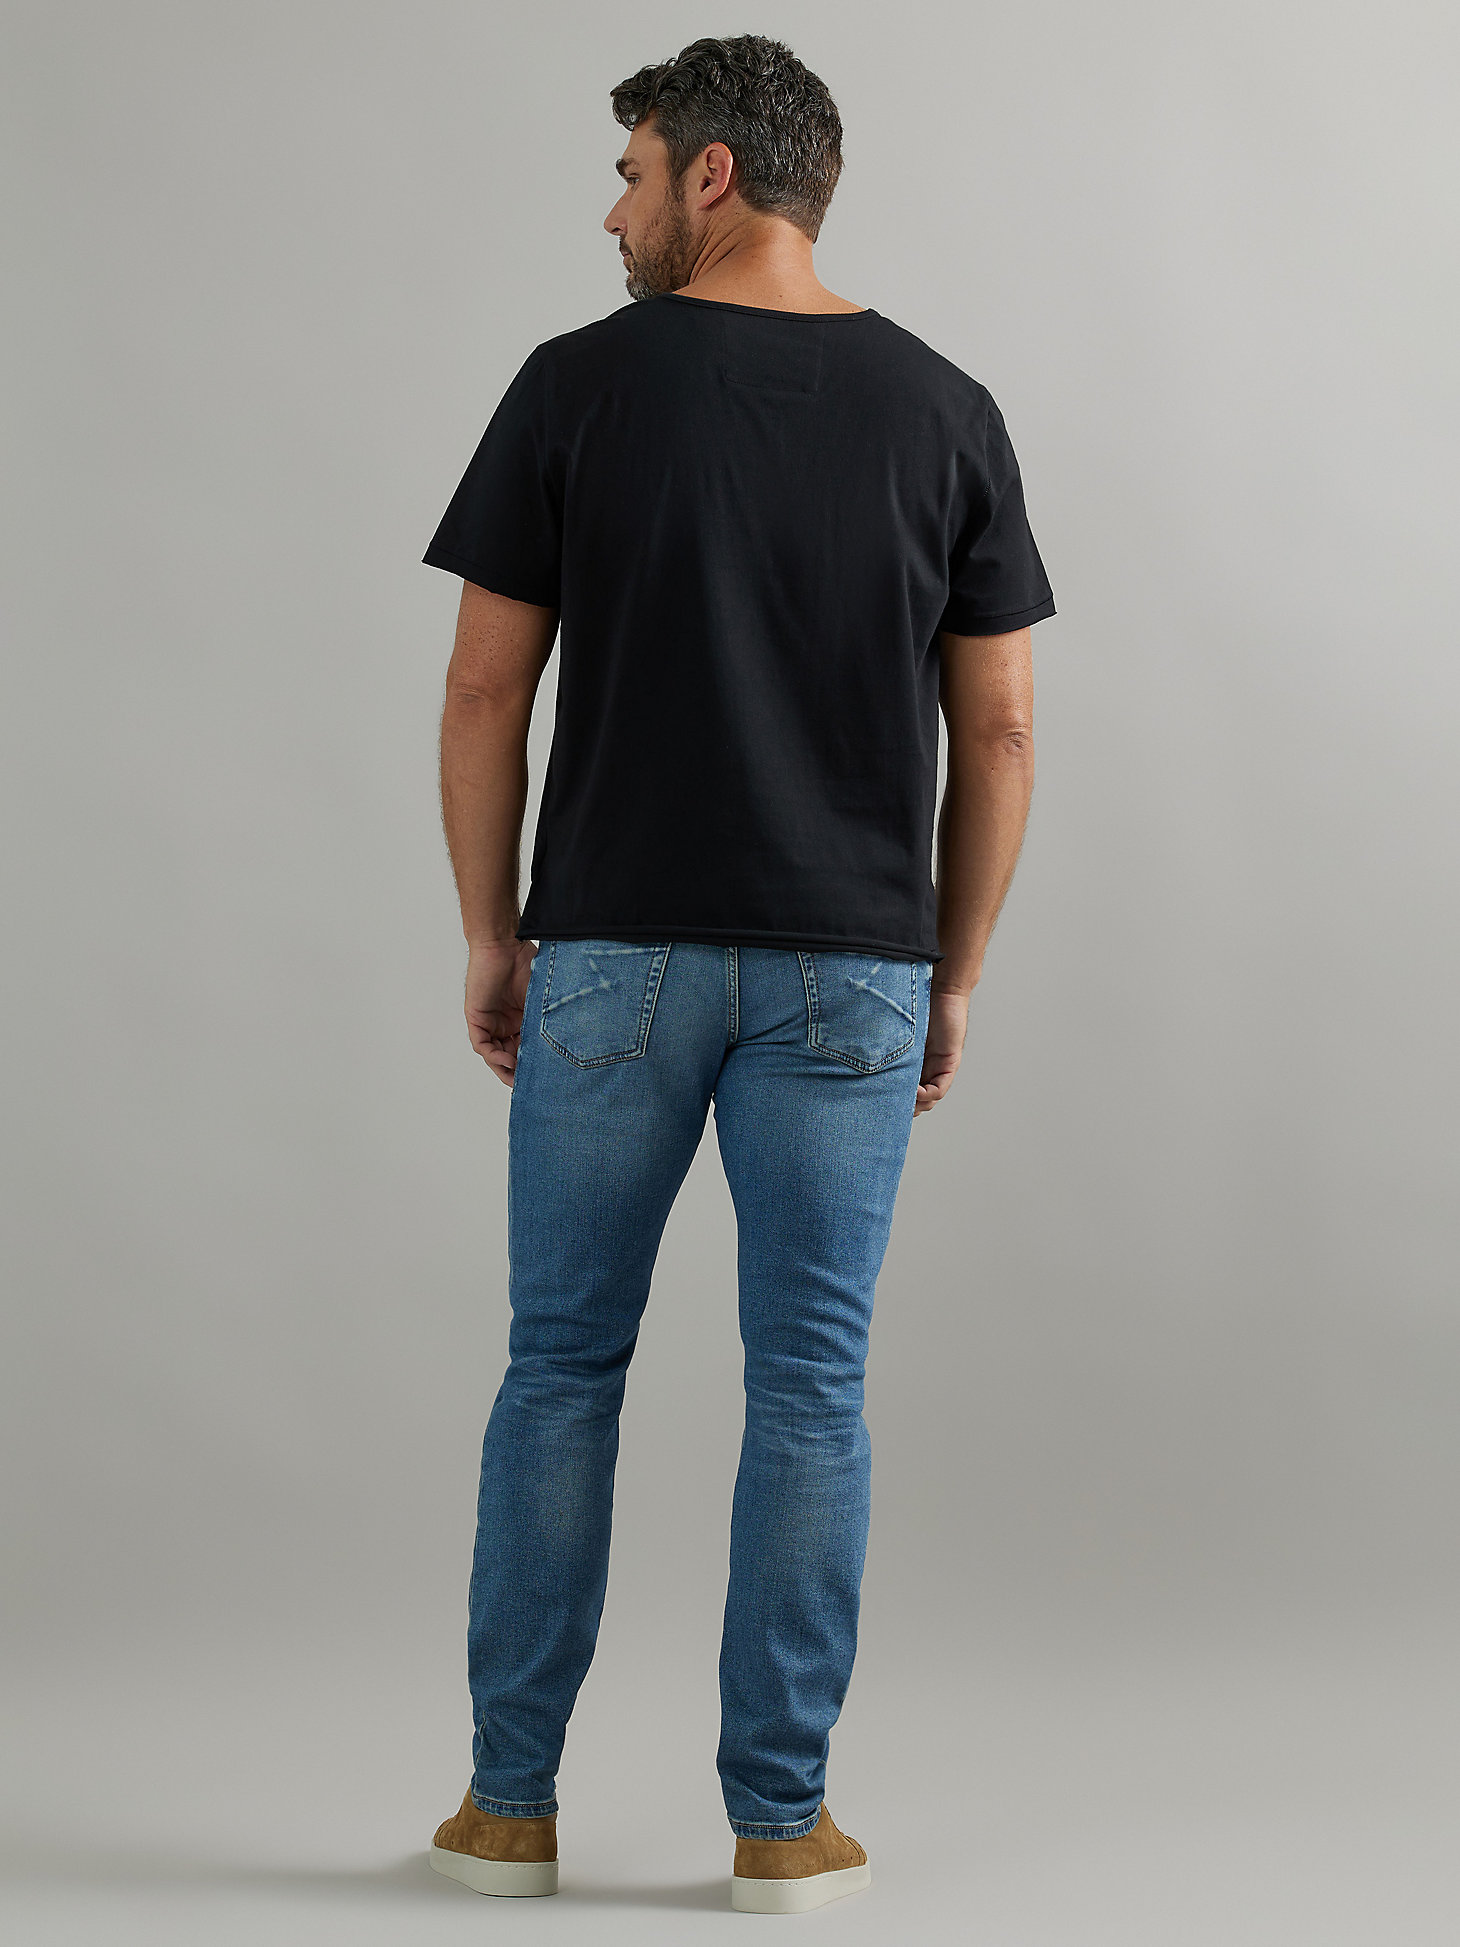 Men's Colburg Slim Fit Straight Jean in Ignition alternative view 6